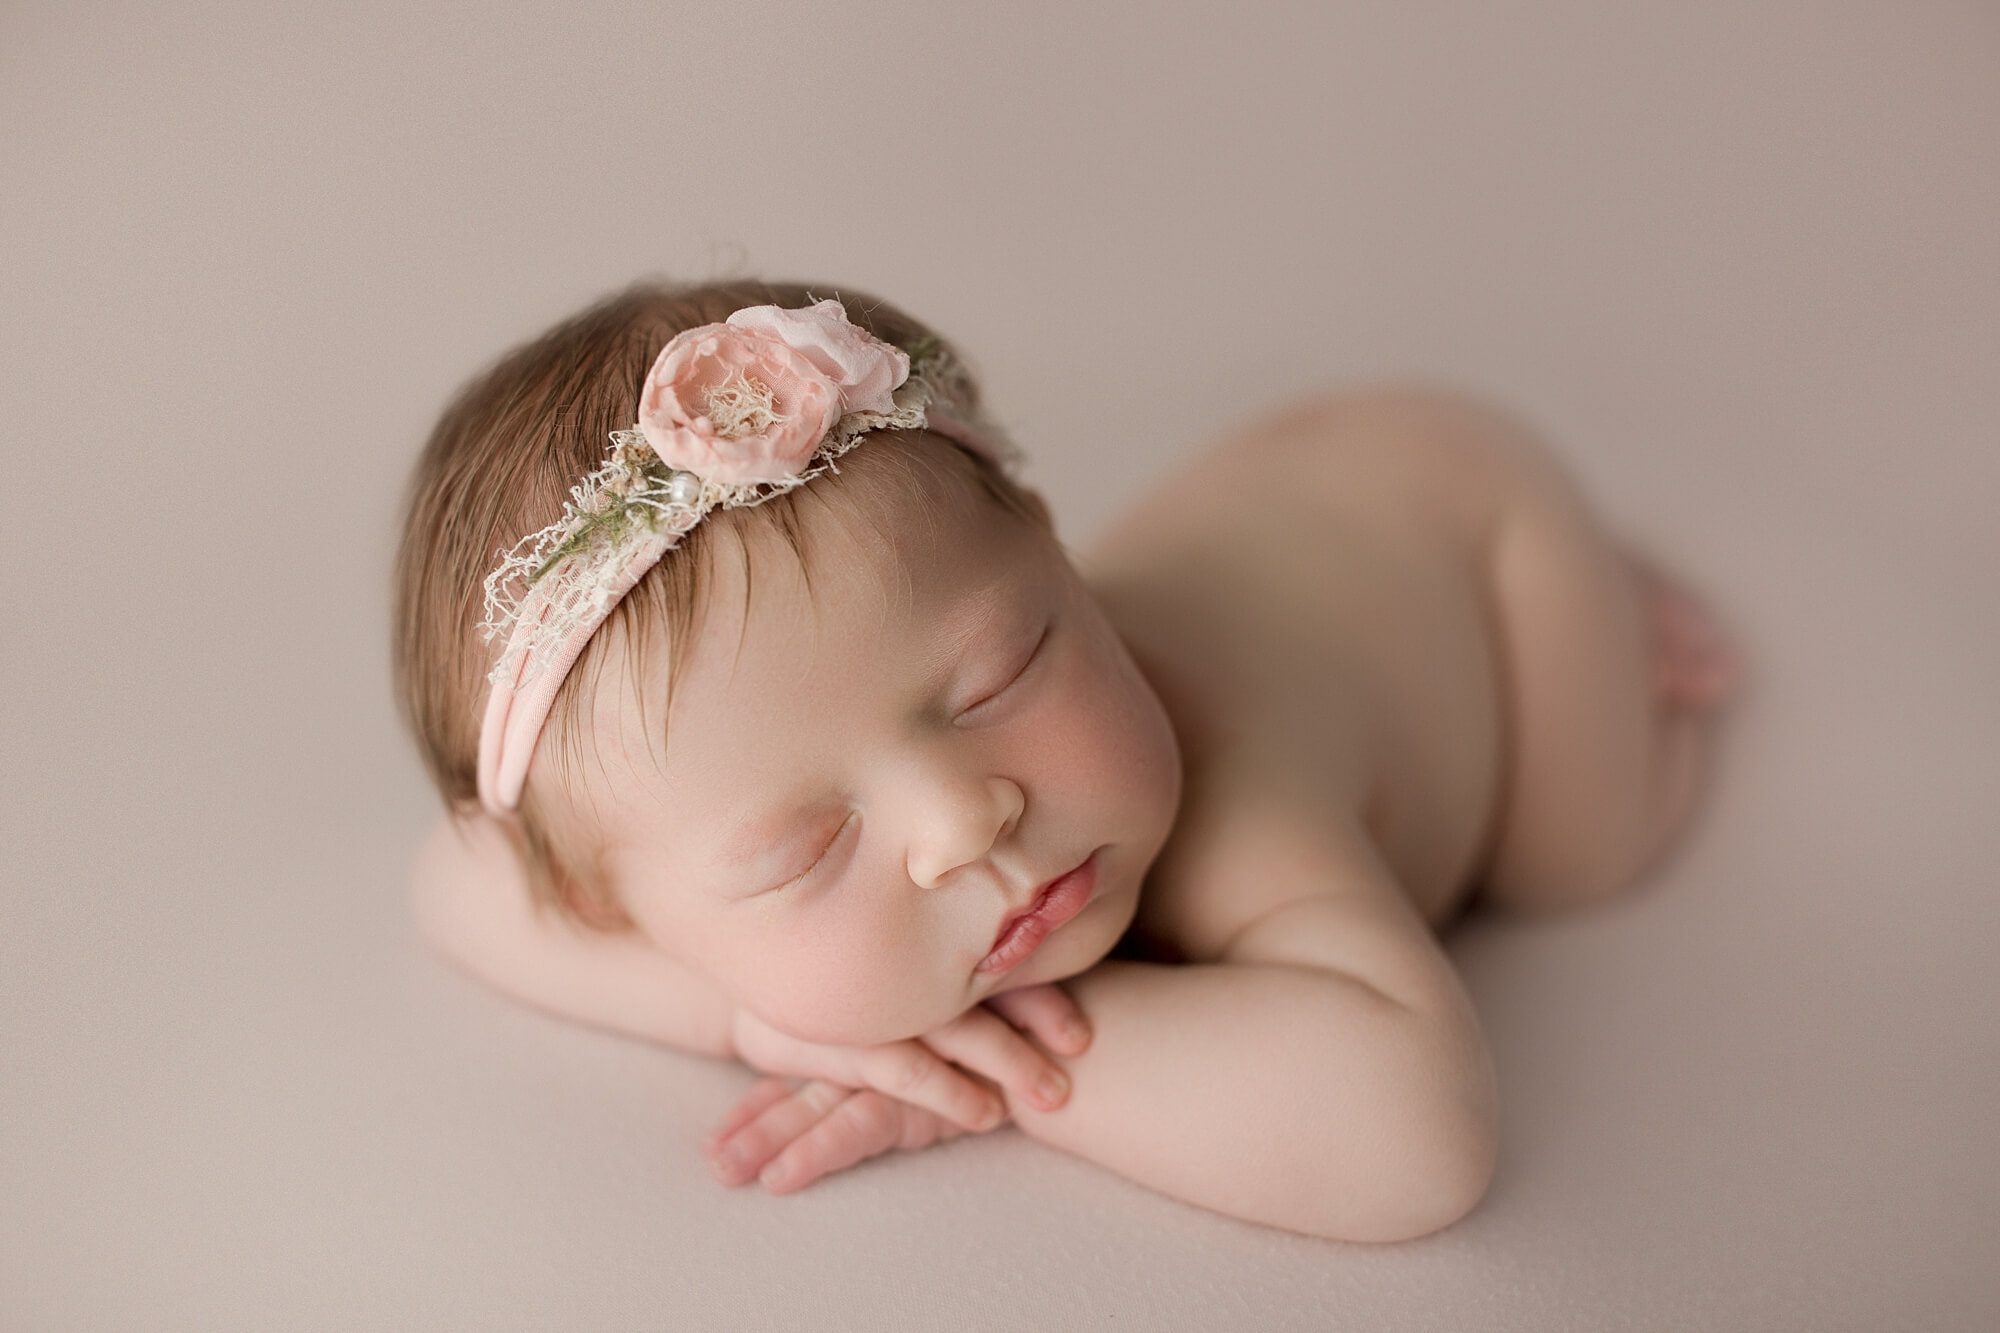 newborn photography seattle - baby girl studio session